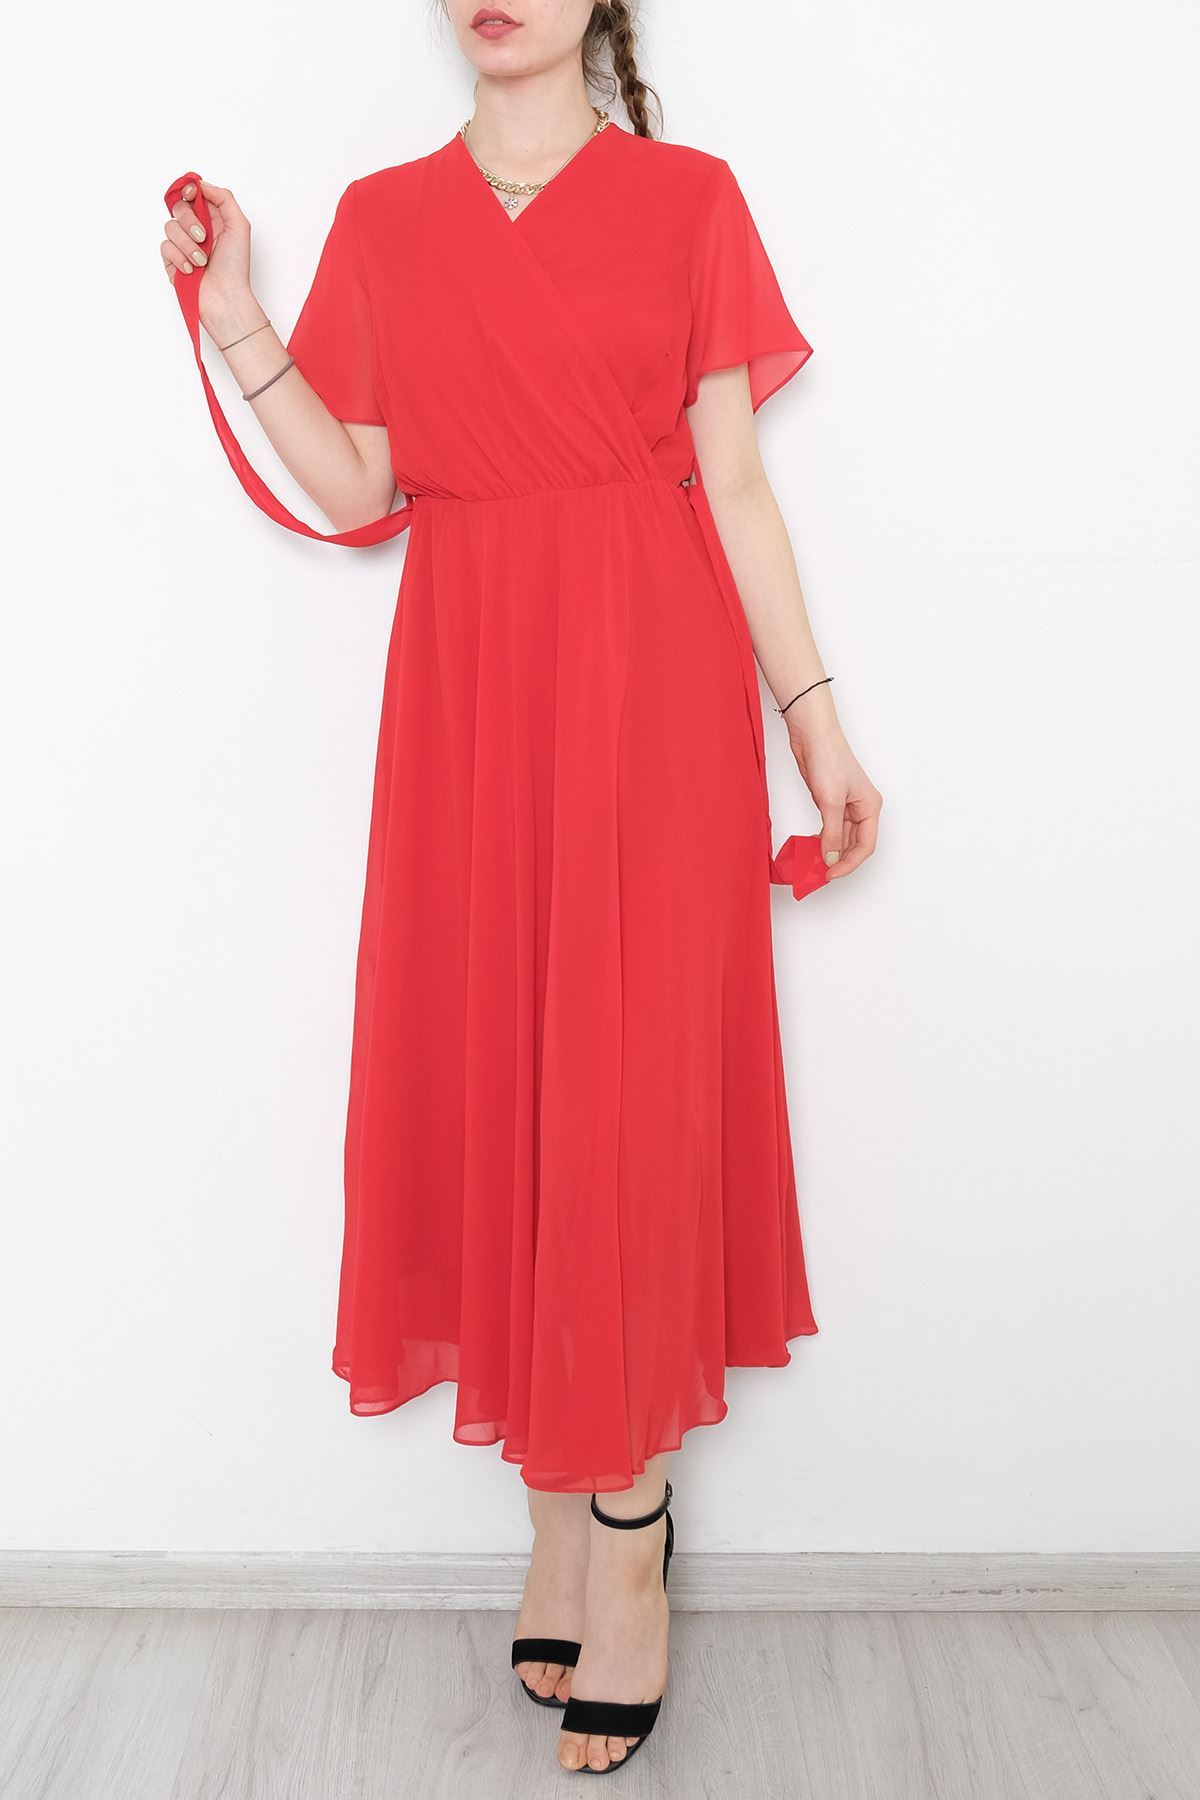 Kruvaze Şifon Elbise Kırmızı - 5125.1322.